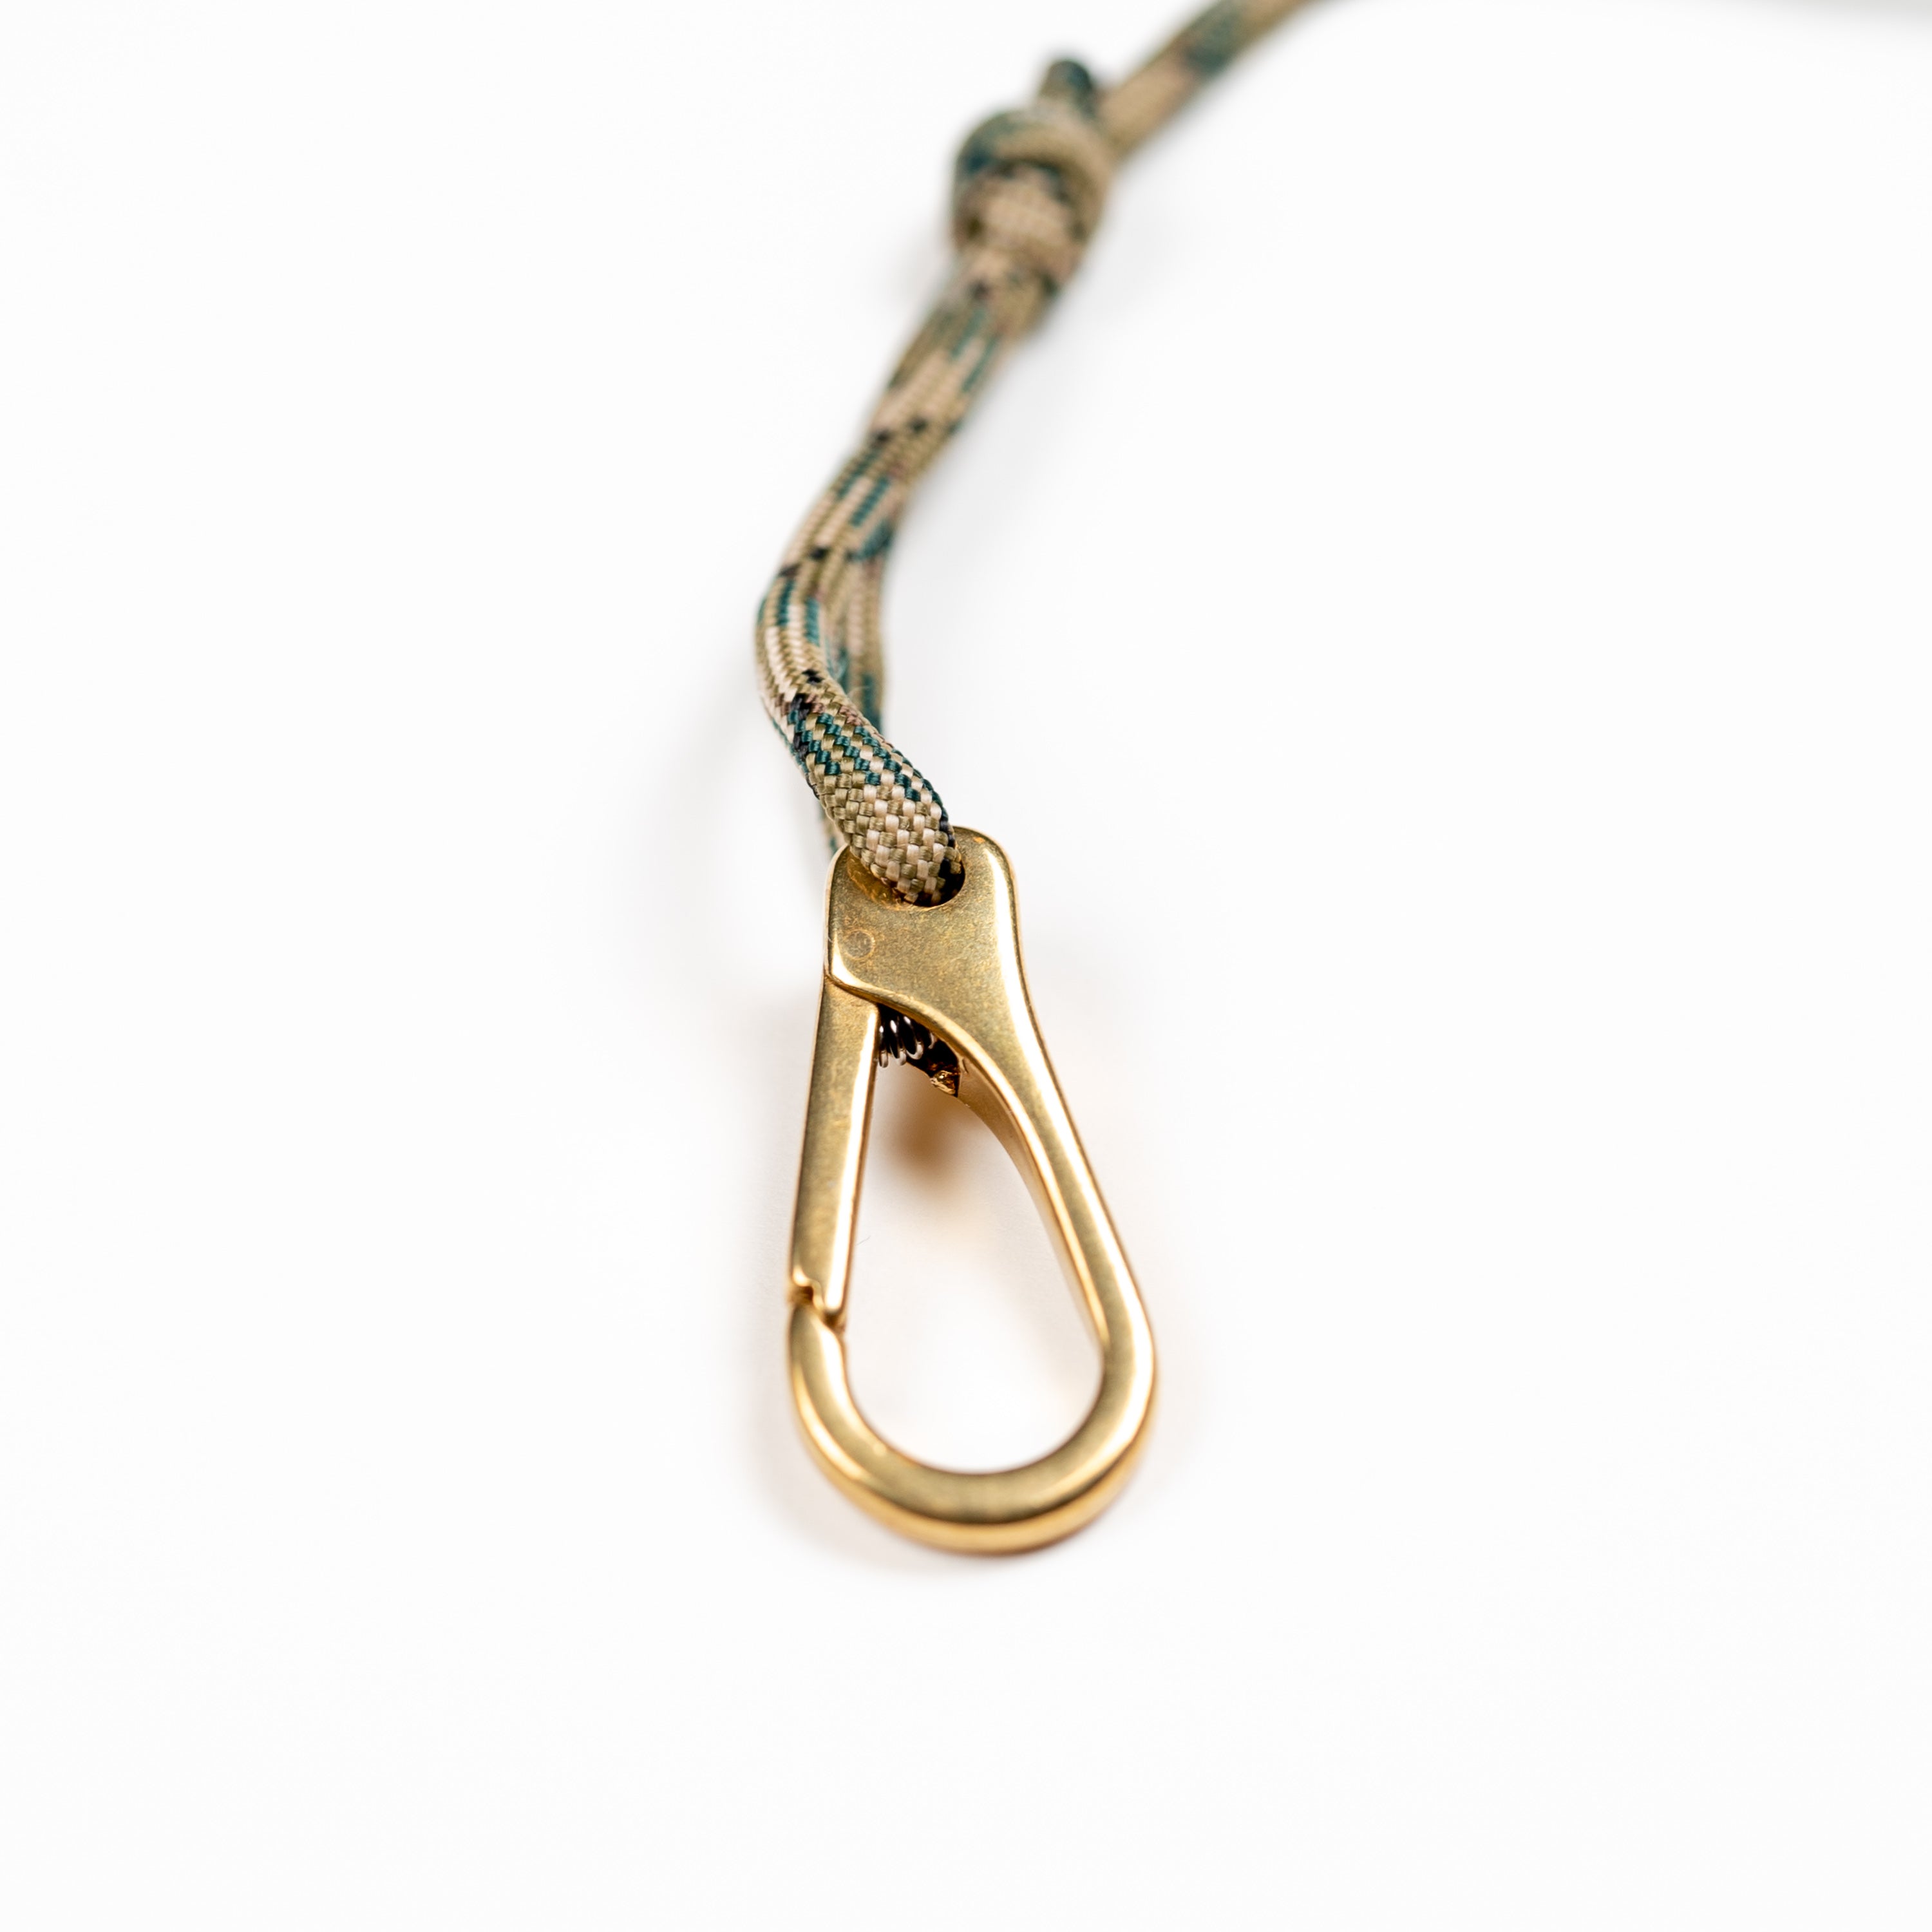 Necklush Paracord Bracelet / Blue / Brass Hook / Unisex Men's Women's Standard